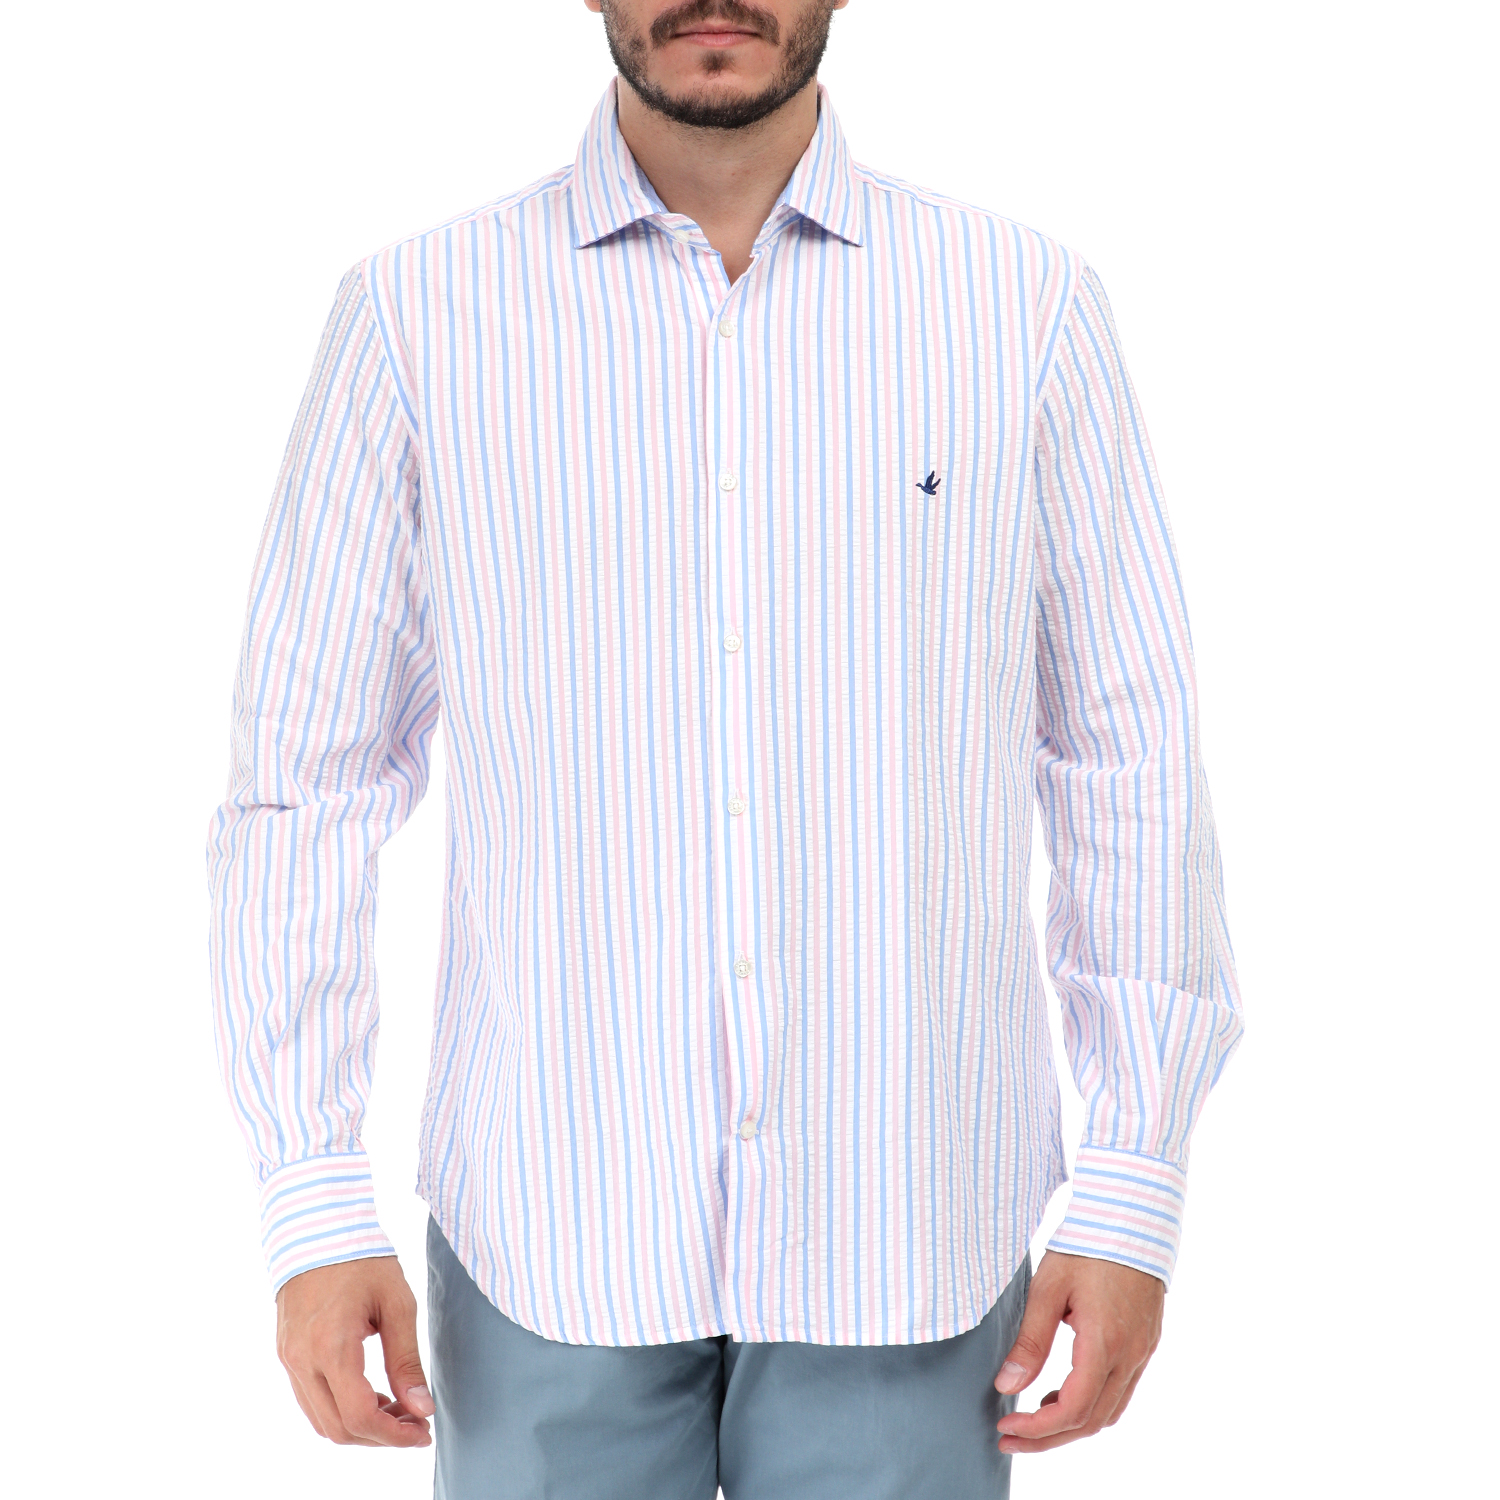 BROOKSFIELD - Ανδρικό πουκάμισο BROOKSFIELD λευκό ροζ Ανδρικά/Ρούχα/Πουκάμισα/Μακρυμάνικα